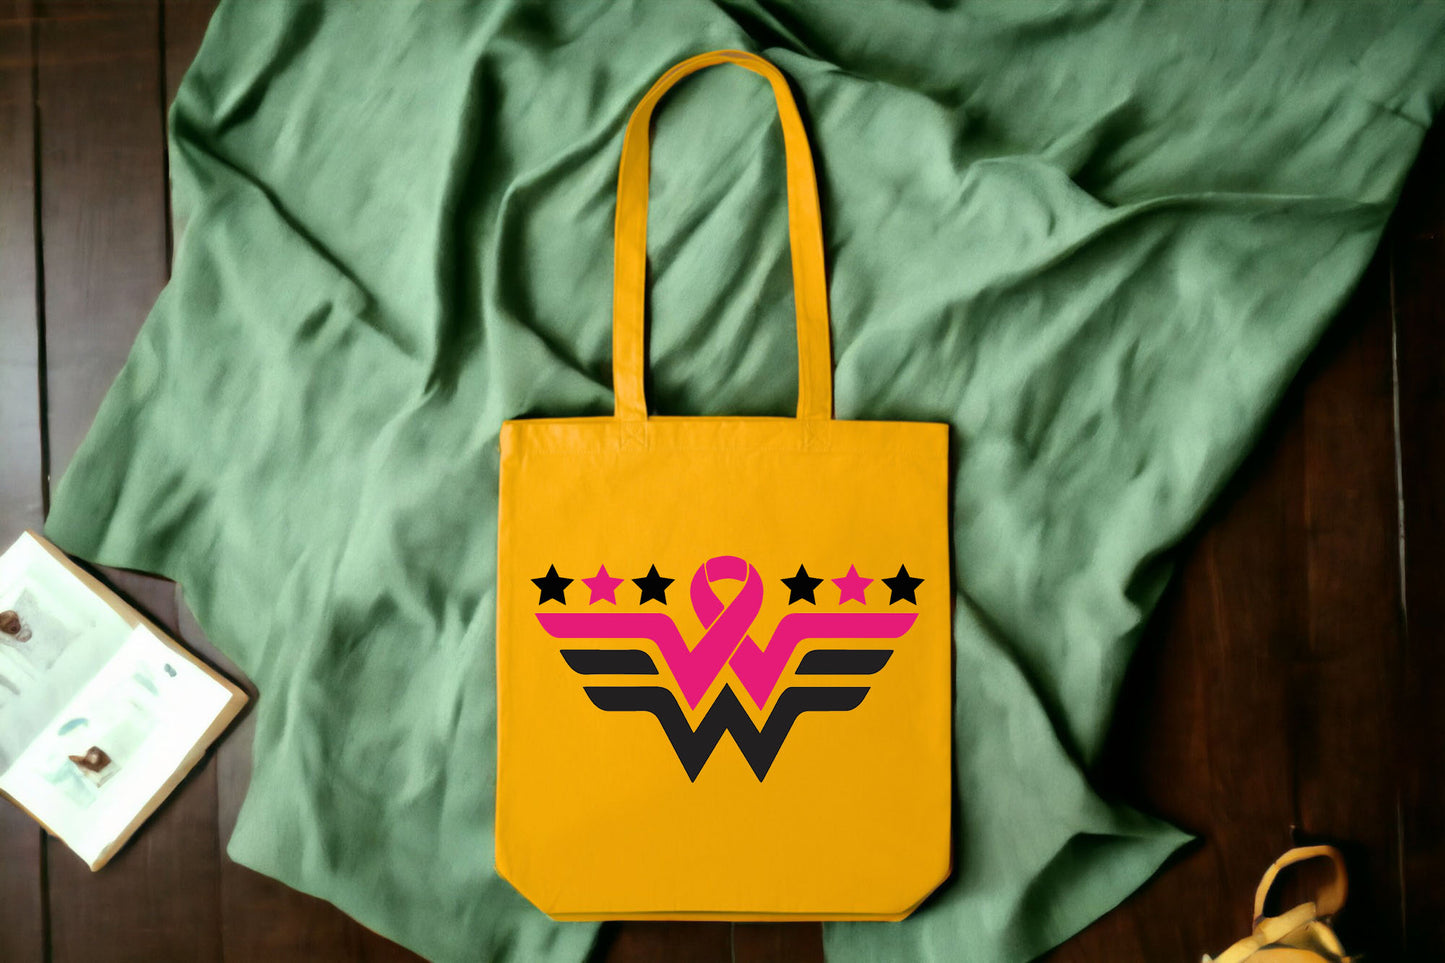 Brest Cancer Pi̇nk Ribbon Tote Bag, Pink Ribbon Bag, Tote Canvas Bags For Women-newamarketing